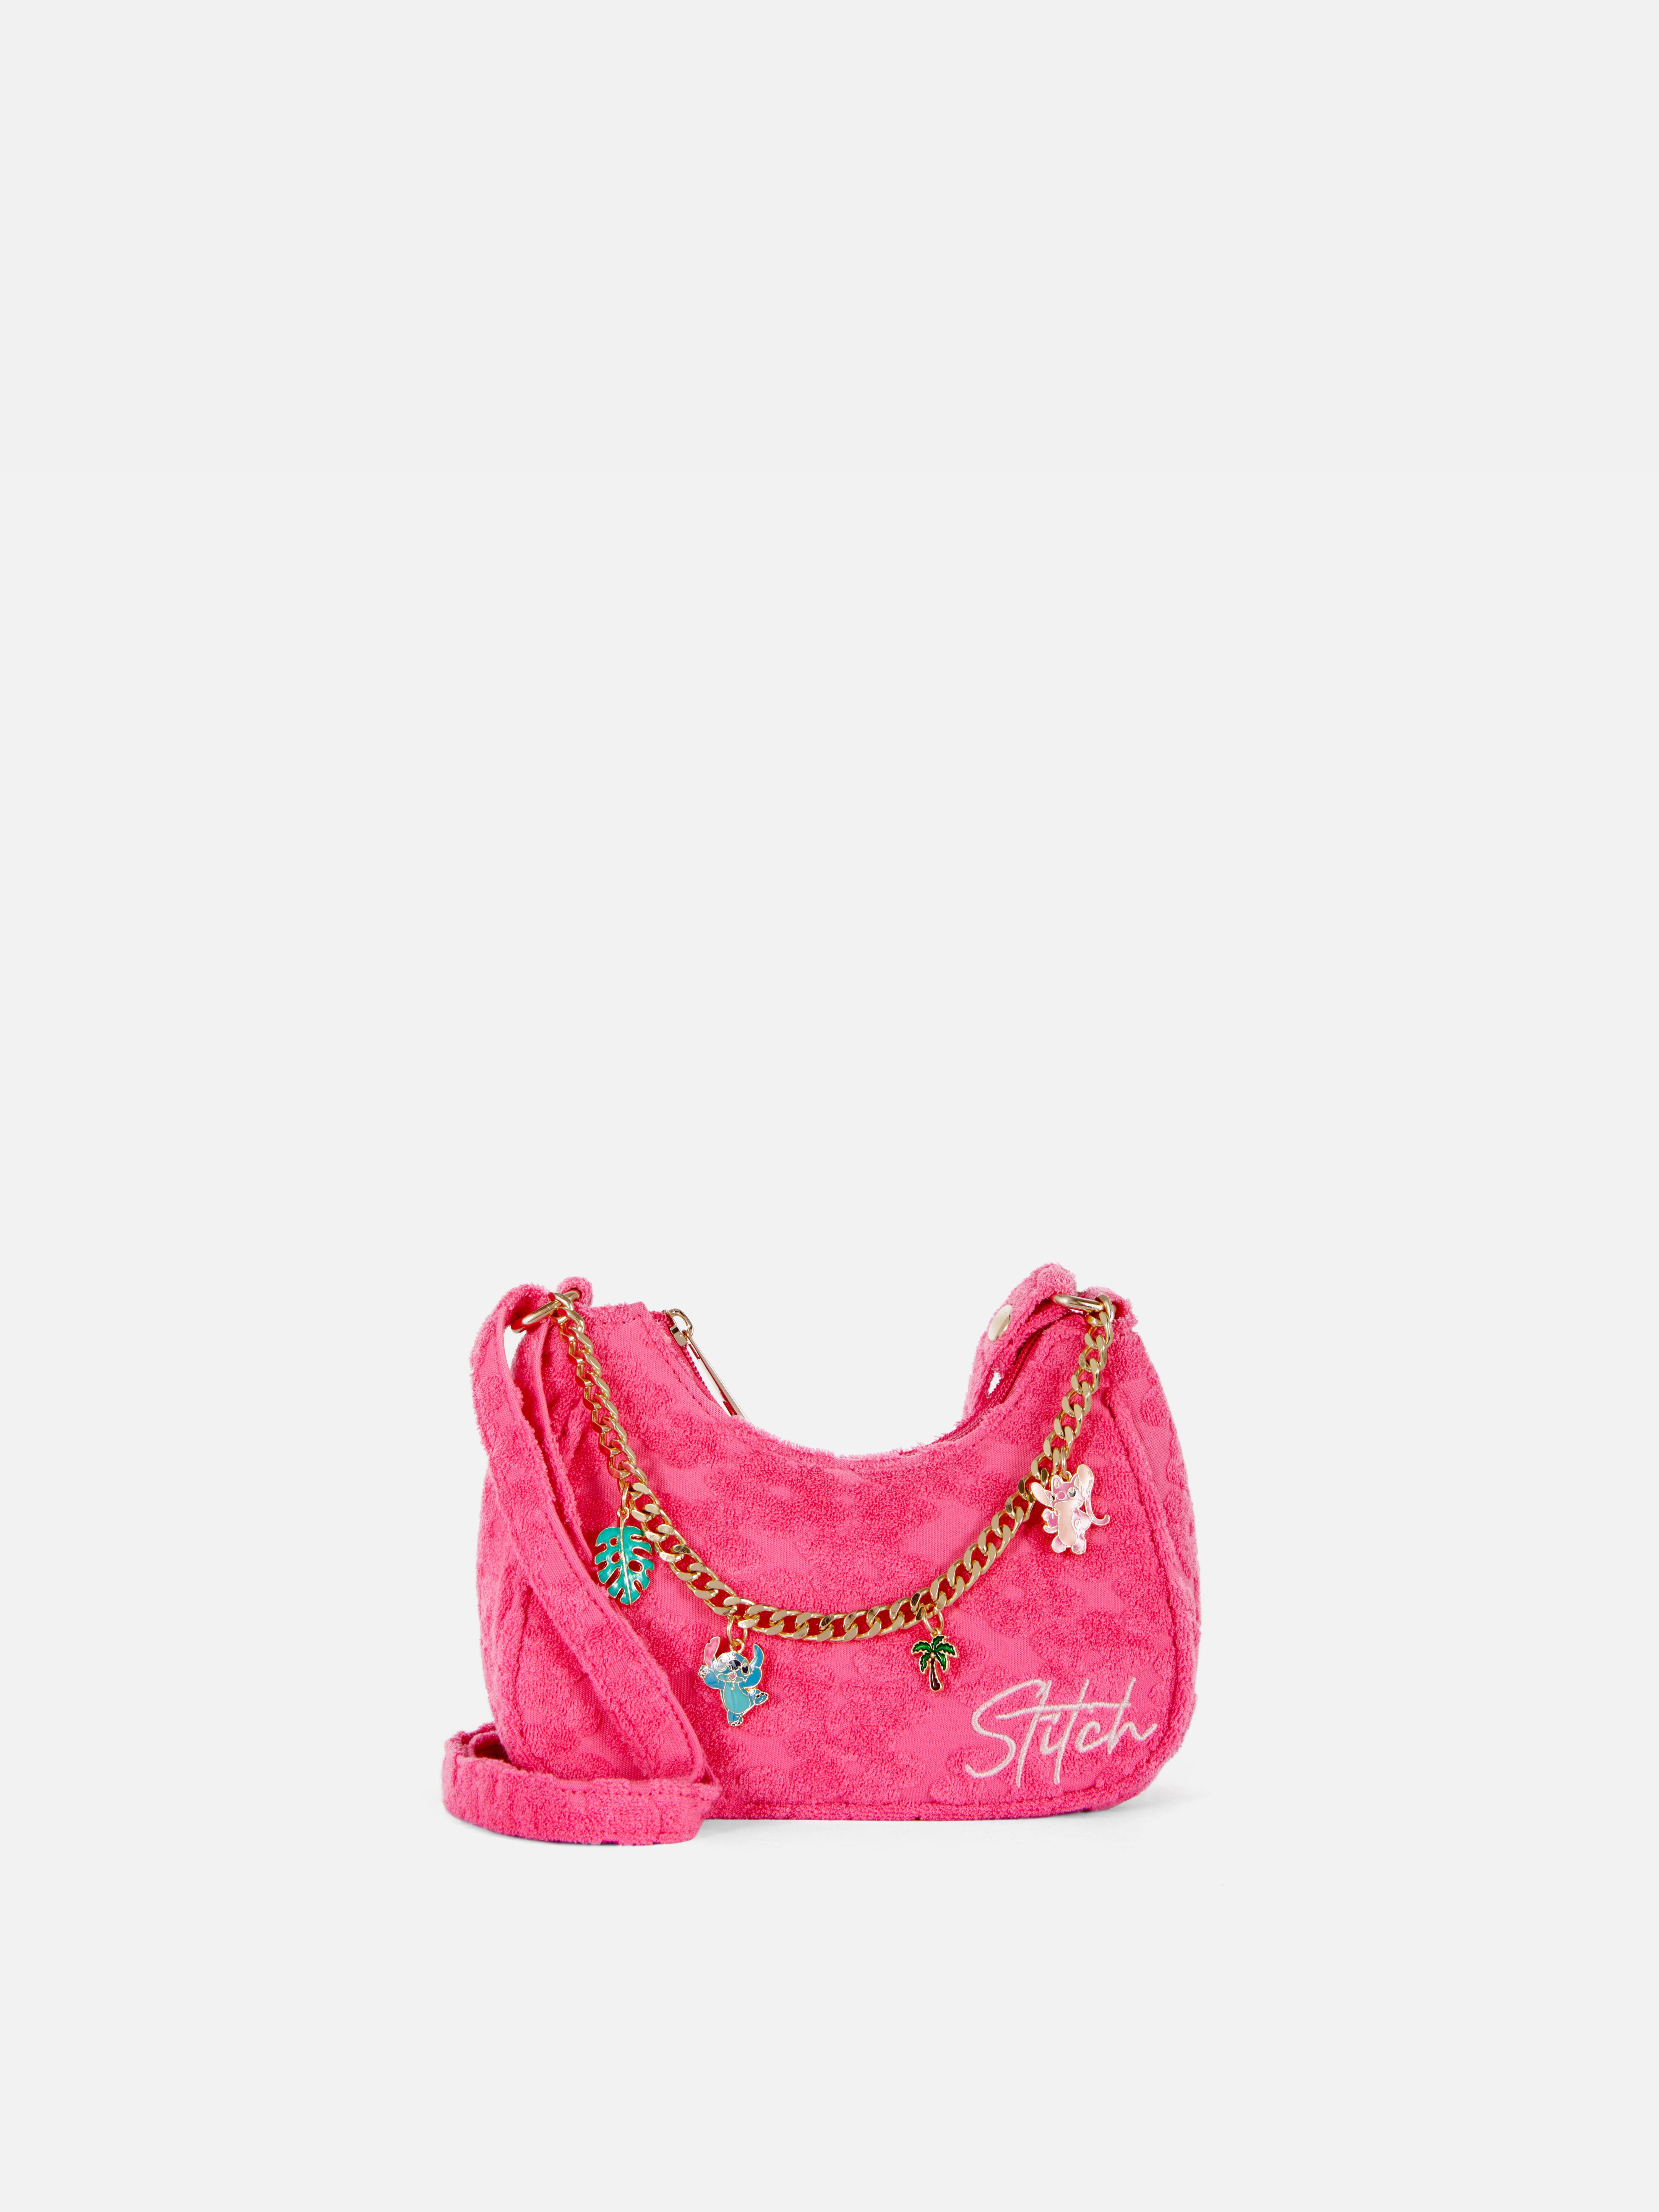 Disney’s Lilo & Stitch Chain Bag